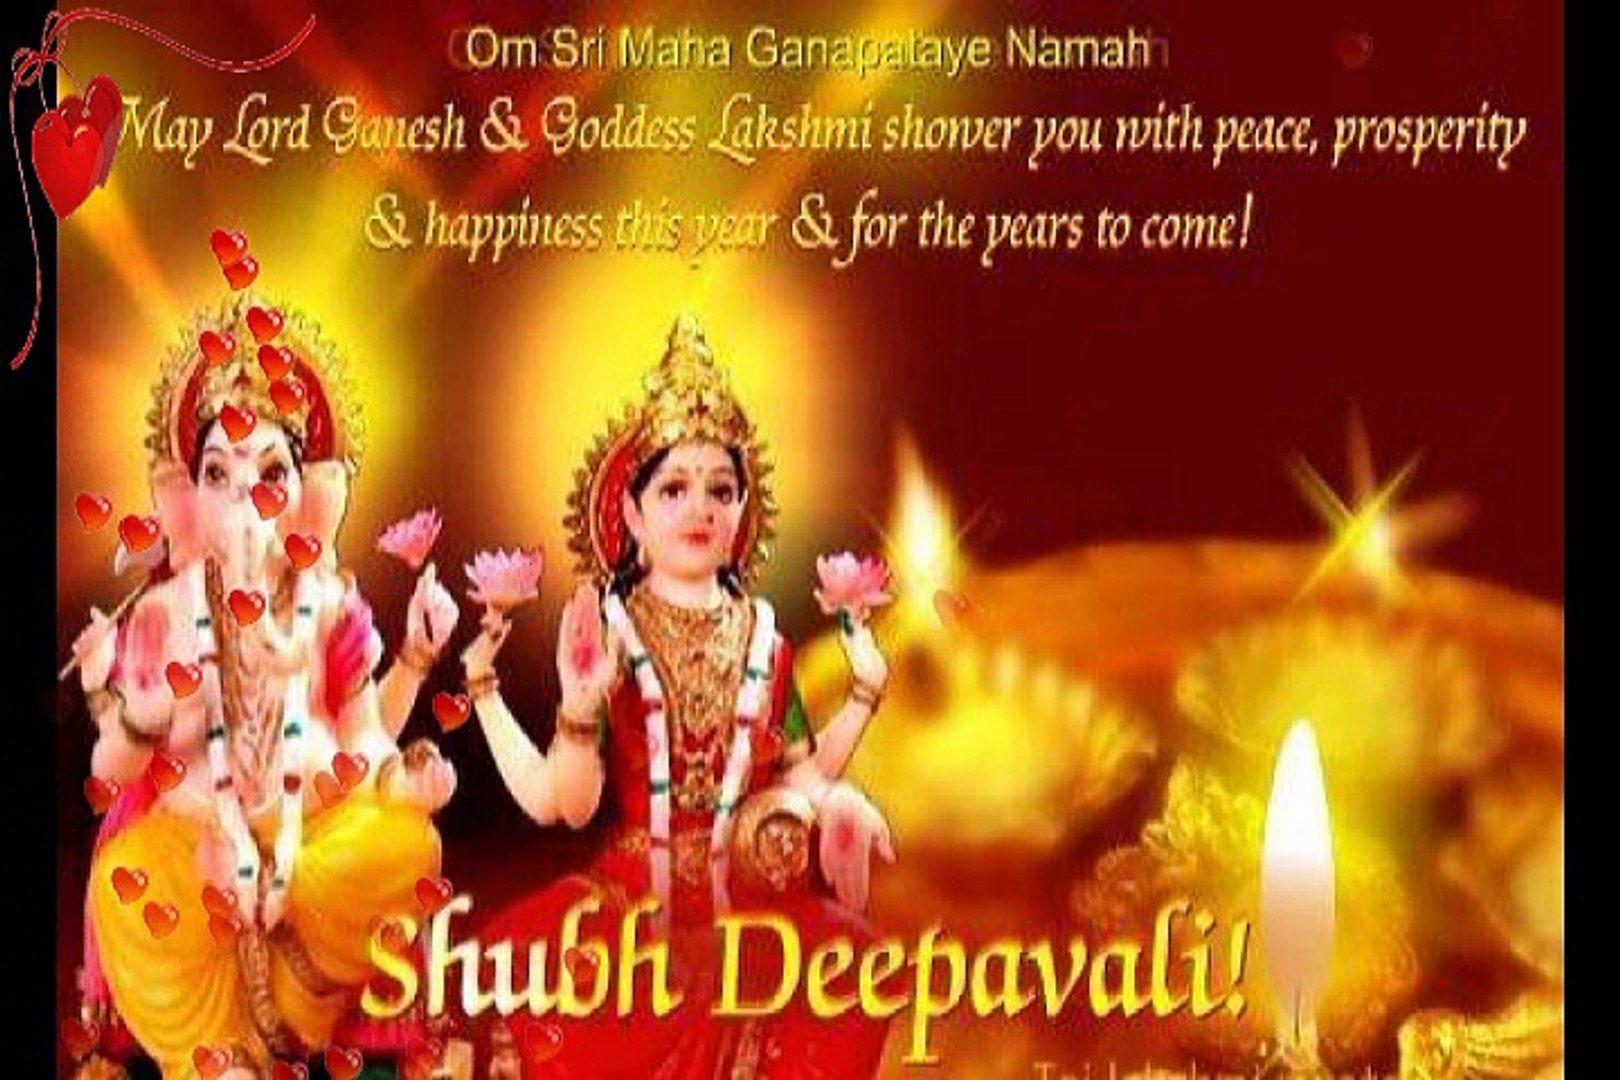 Happy *Chotti Diwali Narak Chaturdashi* Roop Chaturdashi Wishes Quotes Image Photo Picture Collection